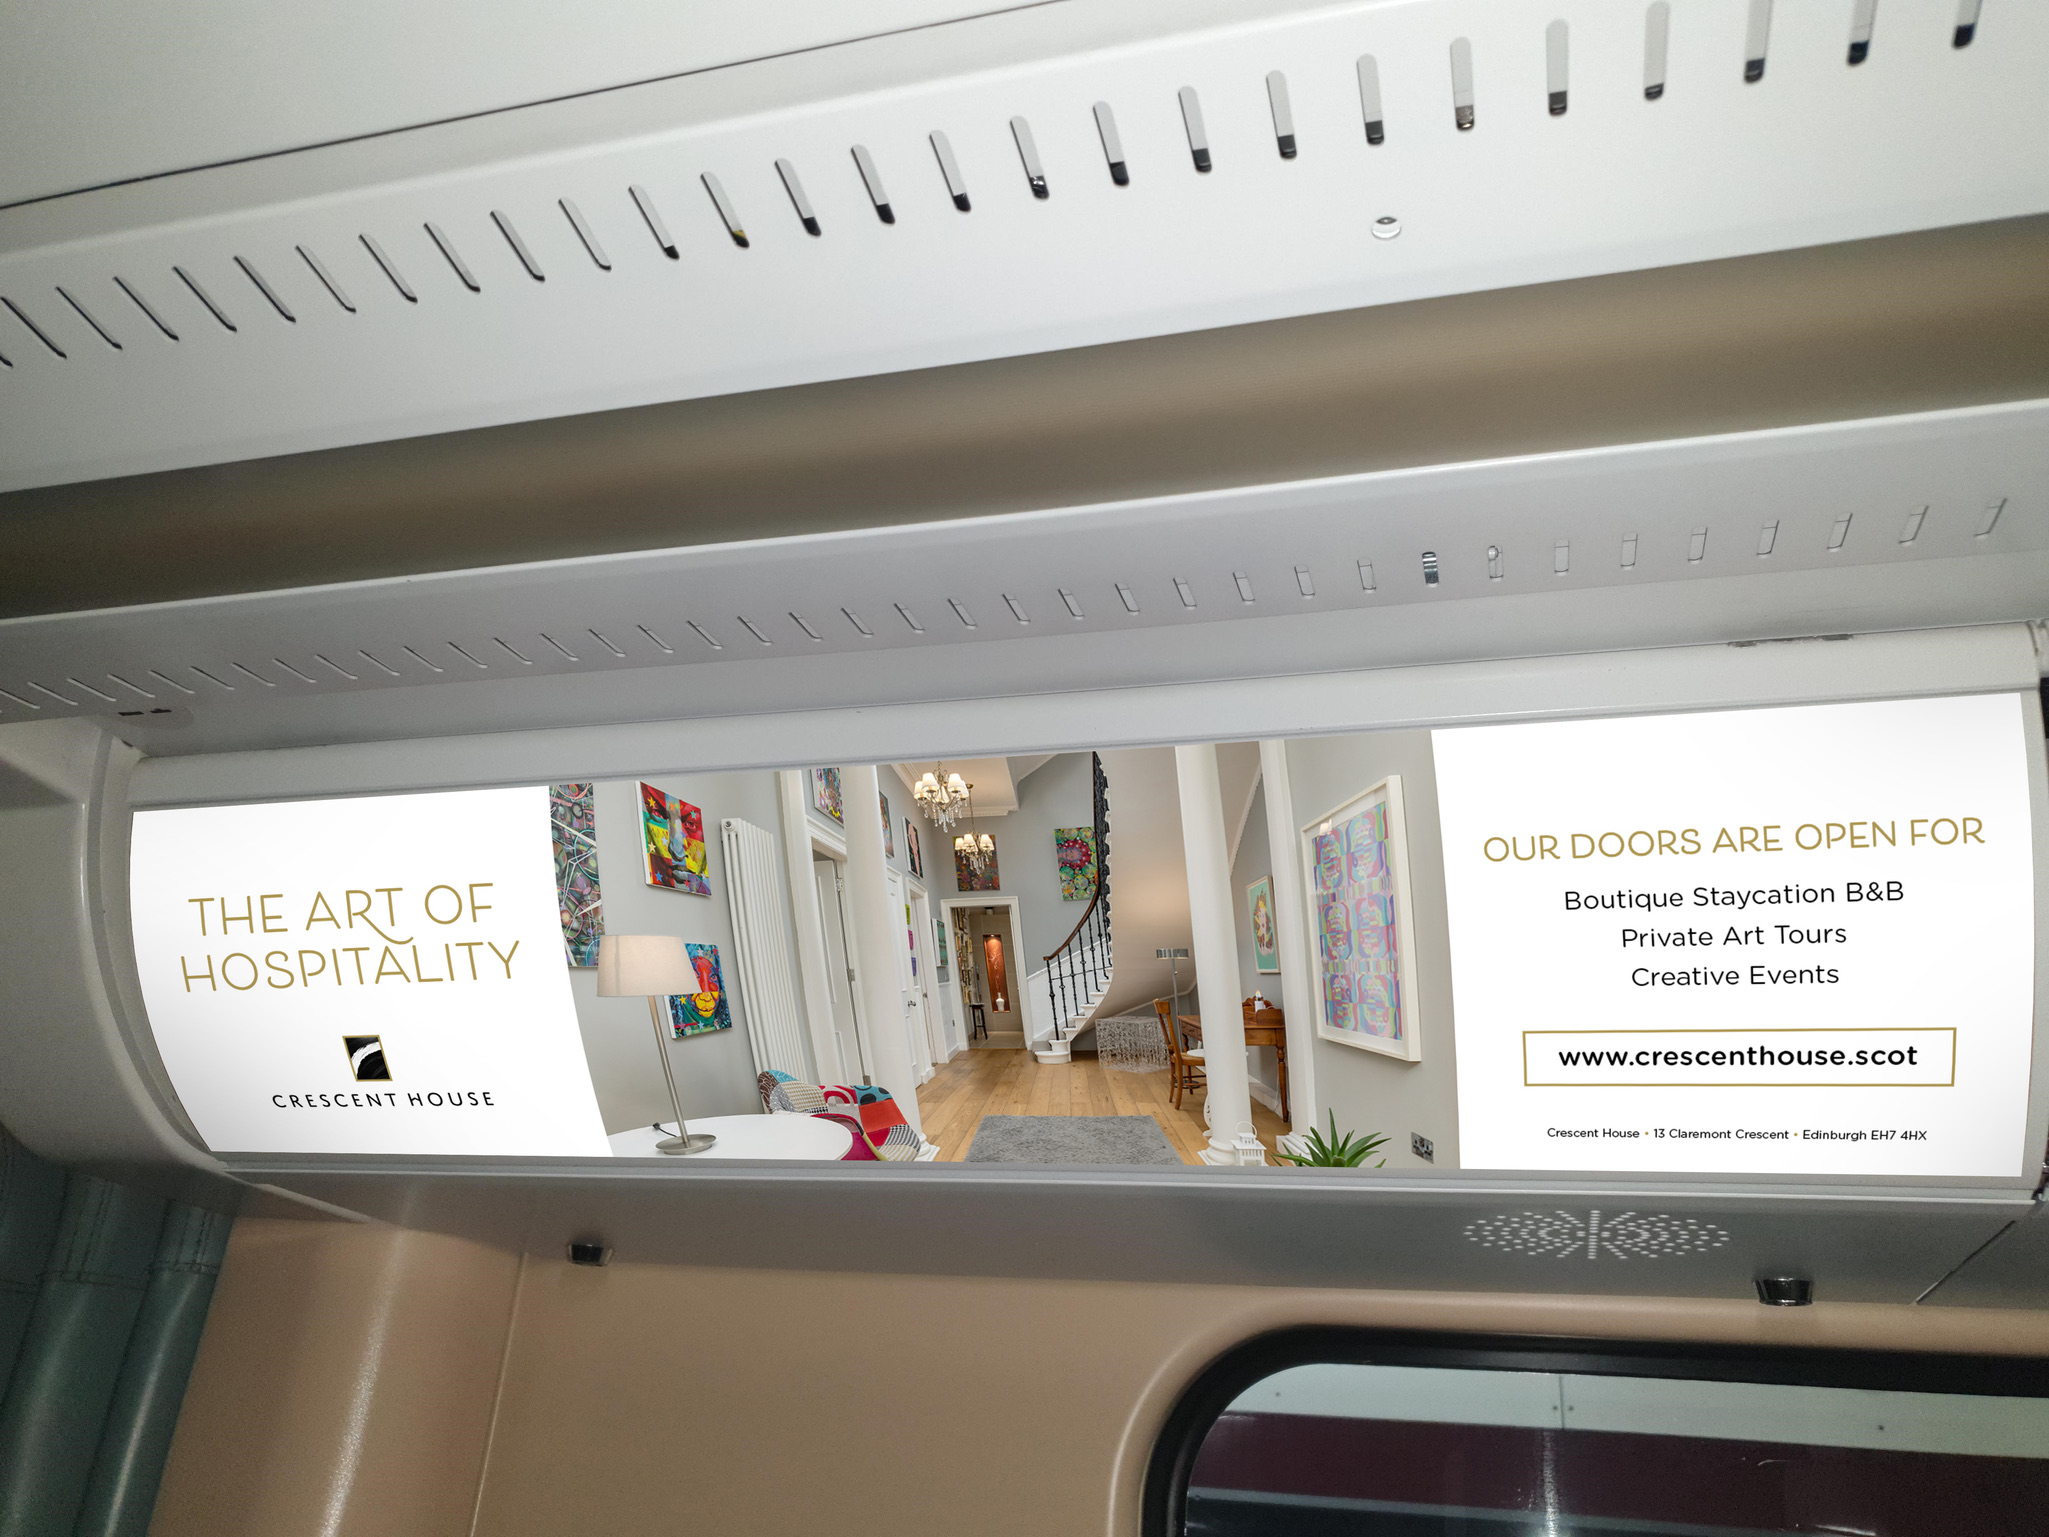 The Art of Hospitality - Edinburgh Tram Advert